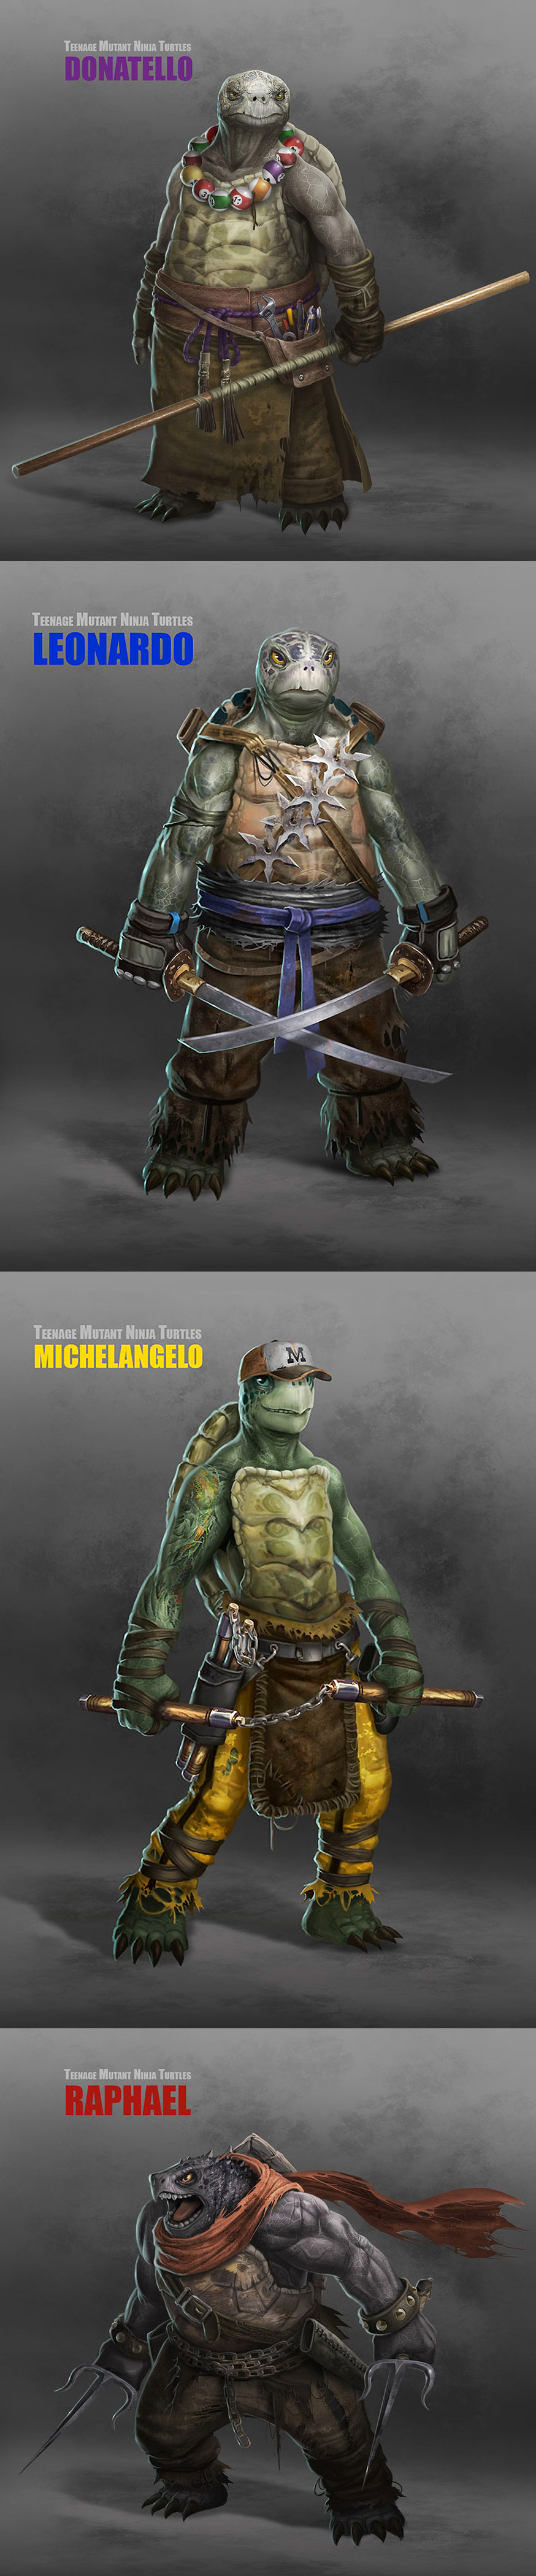 Las tortugas ninja mutantes realistas